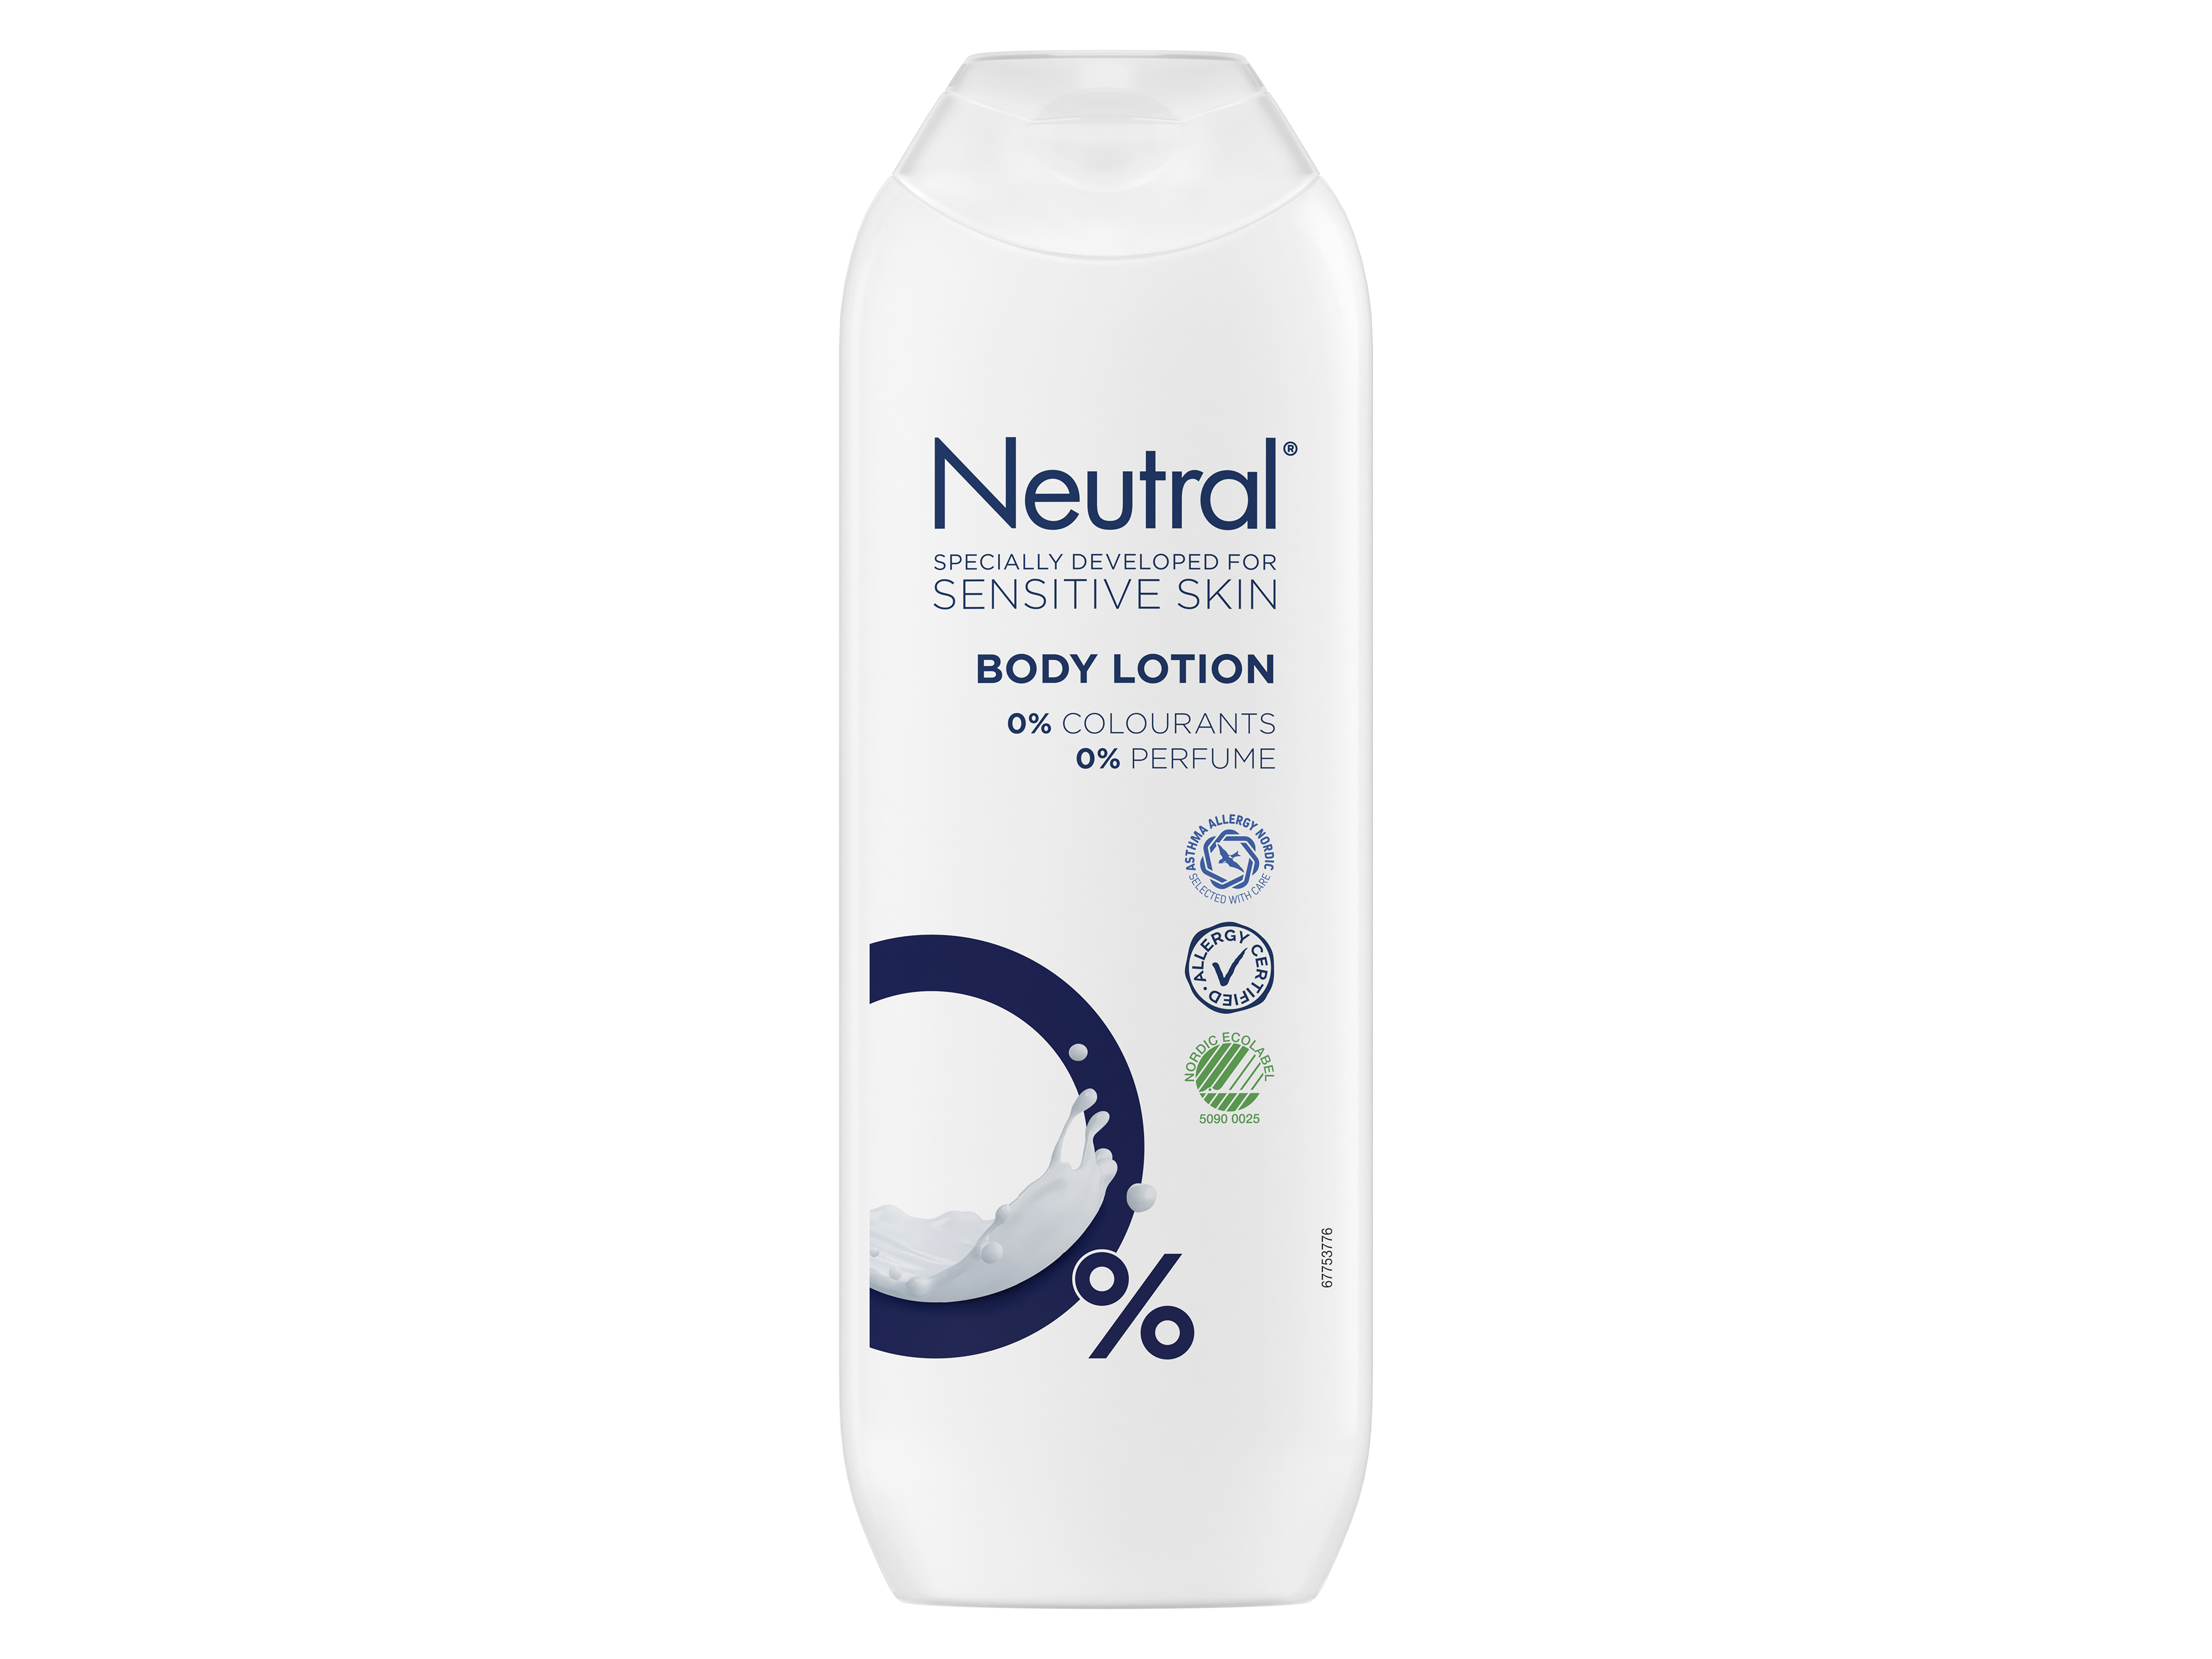 Neutral Body Lotion, 250 ml